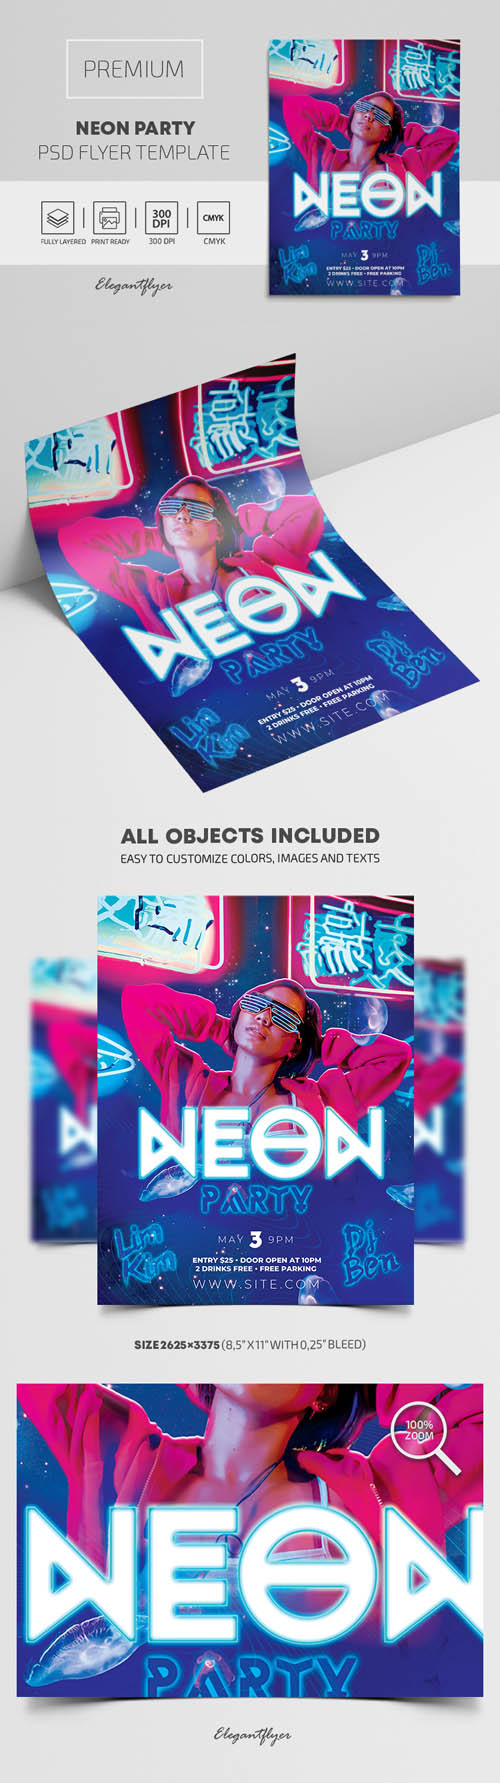 Neon Party Premium PSD Flyer Template